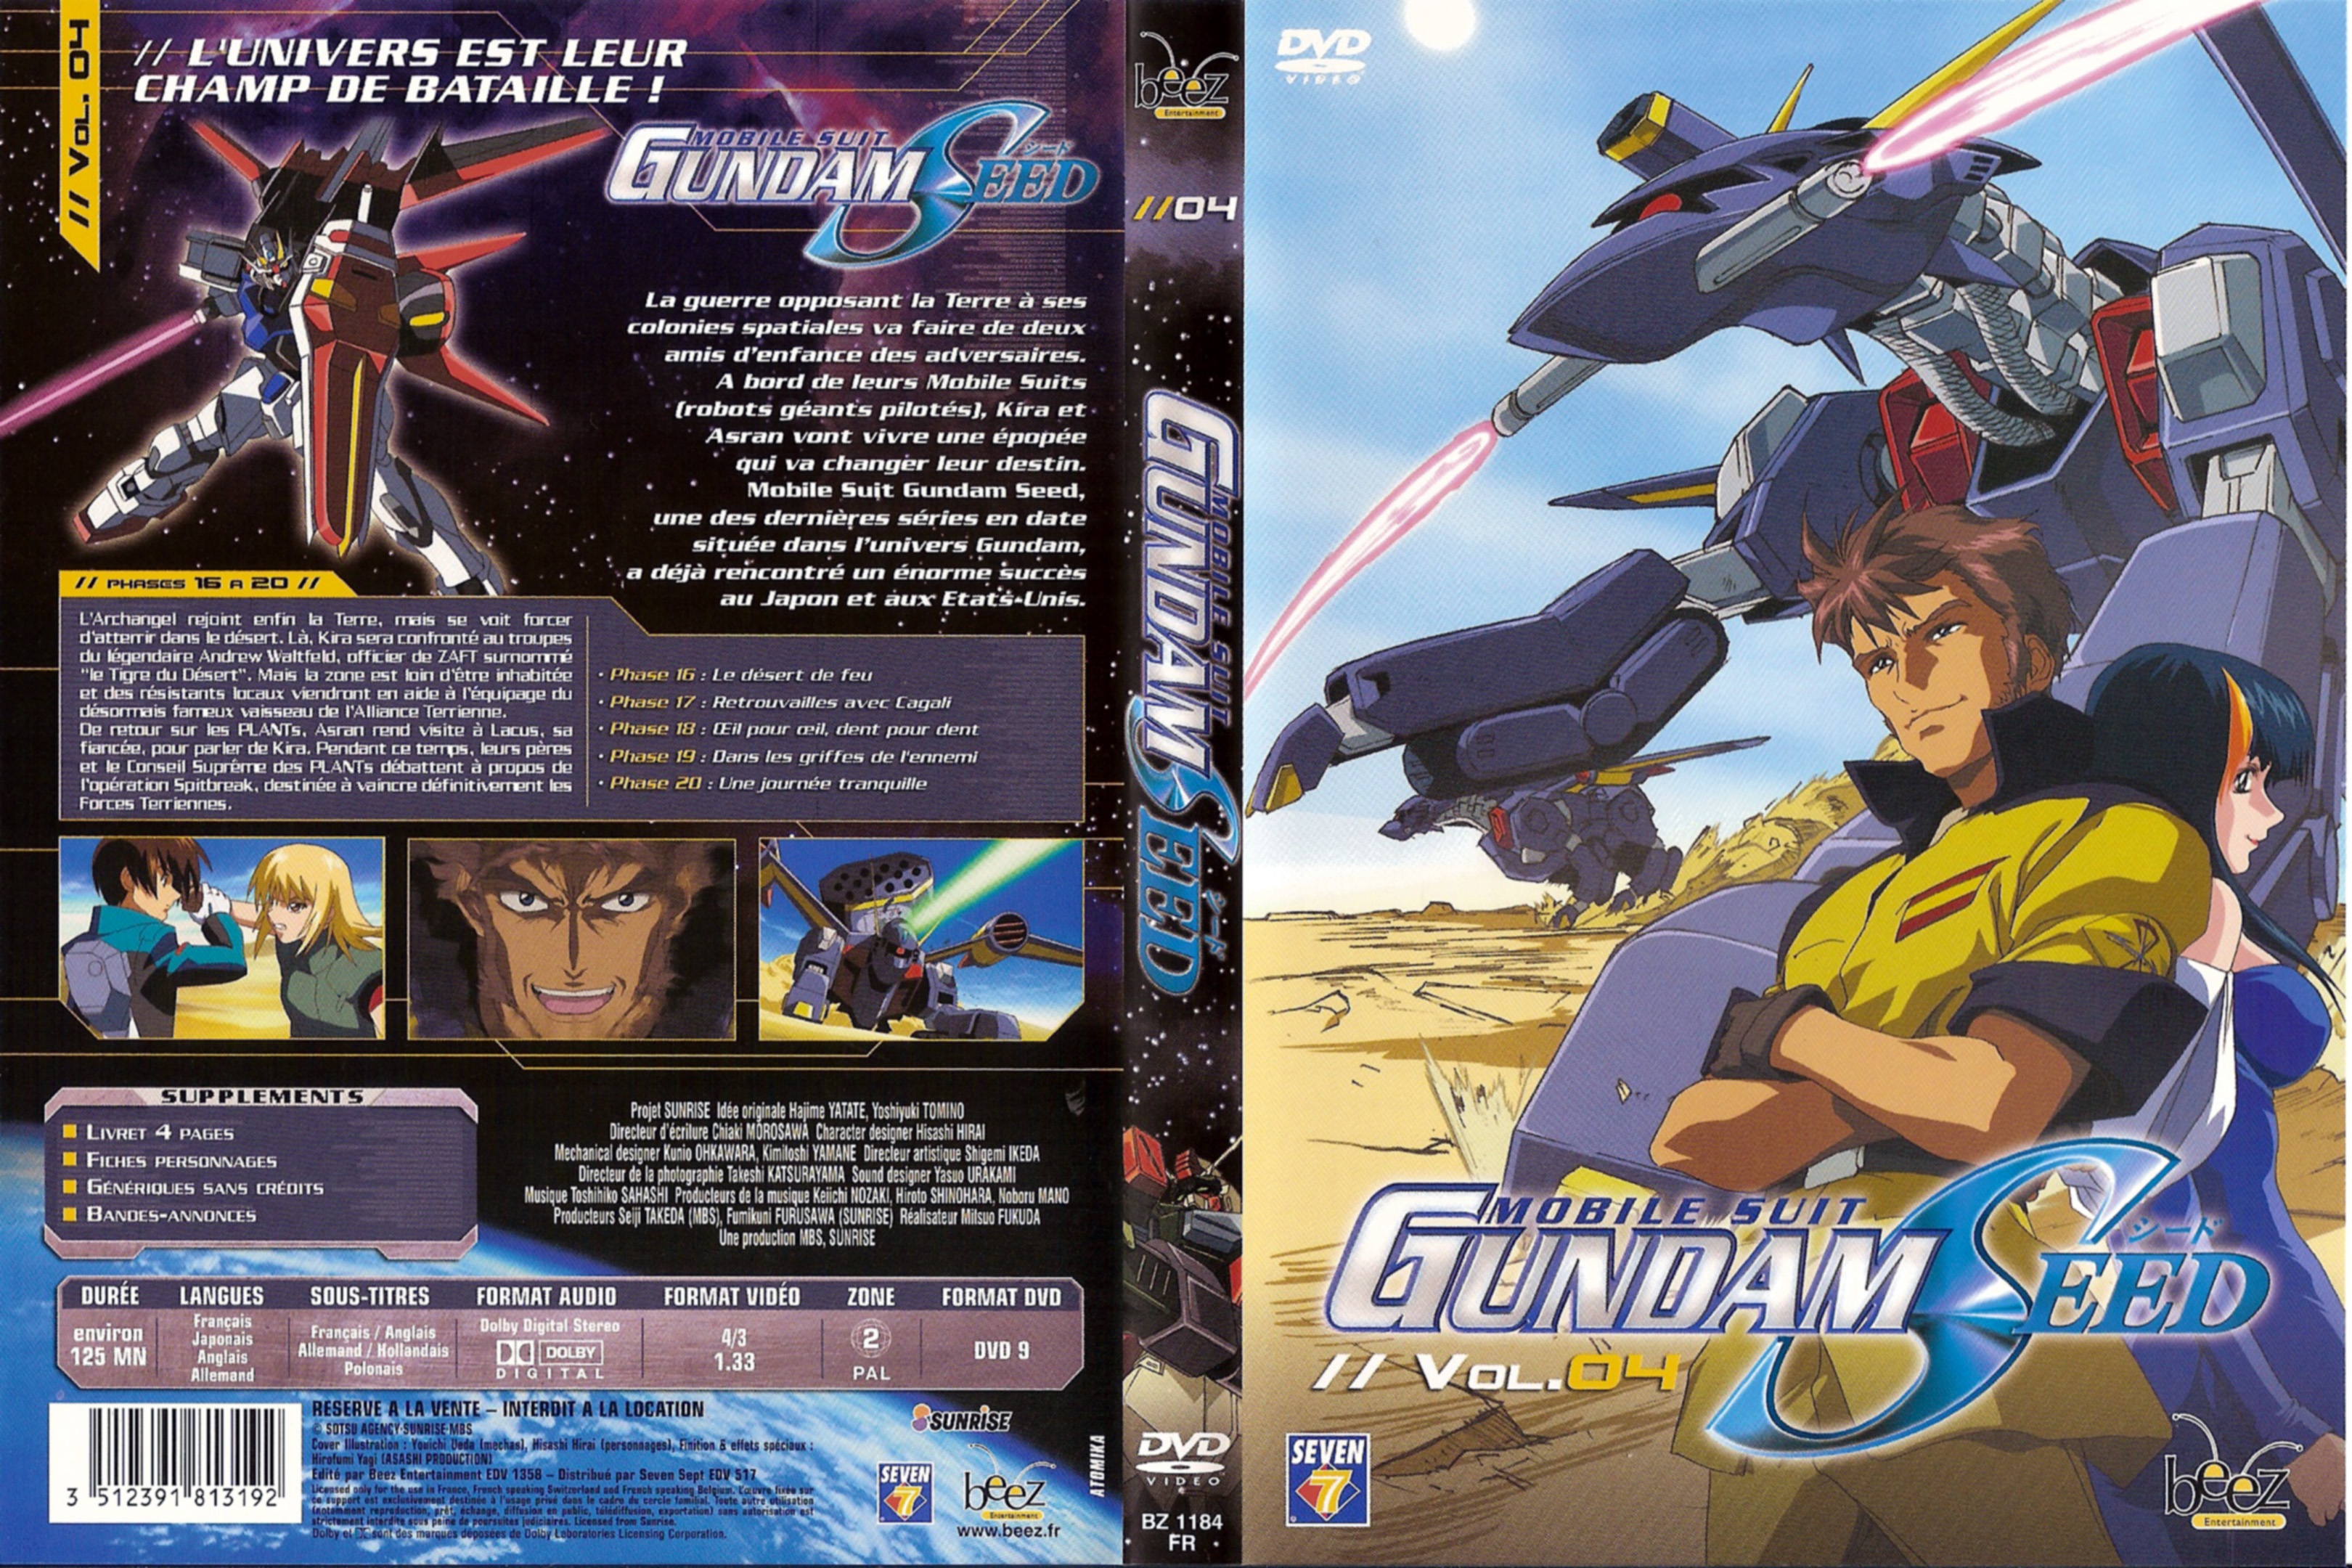 Jaquette DVD Gundam seed vol 04